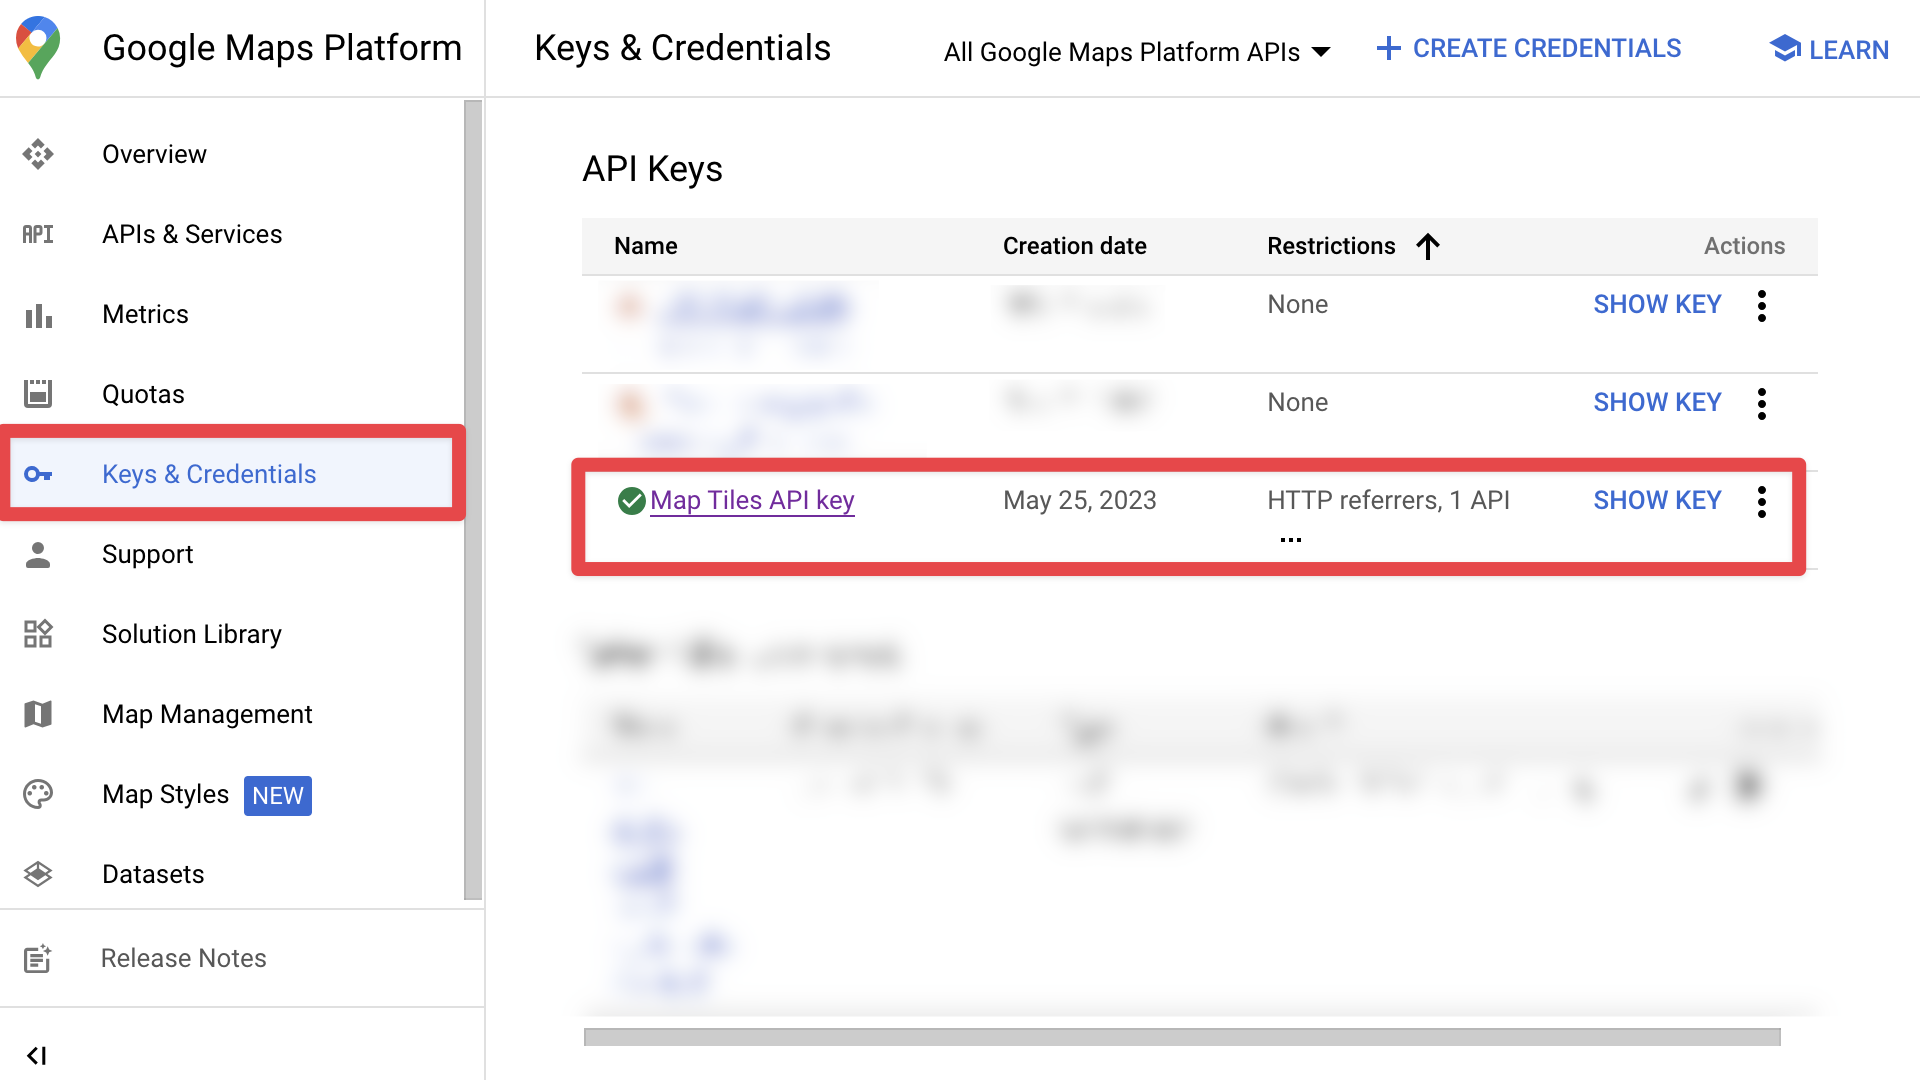 Retrieving the Map Tiles API key from the [Google Cloud Console](https://console.cloud.google.com/google/maps-apis/credentials).